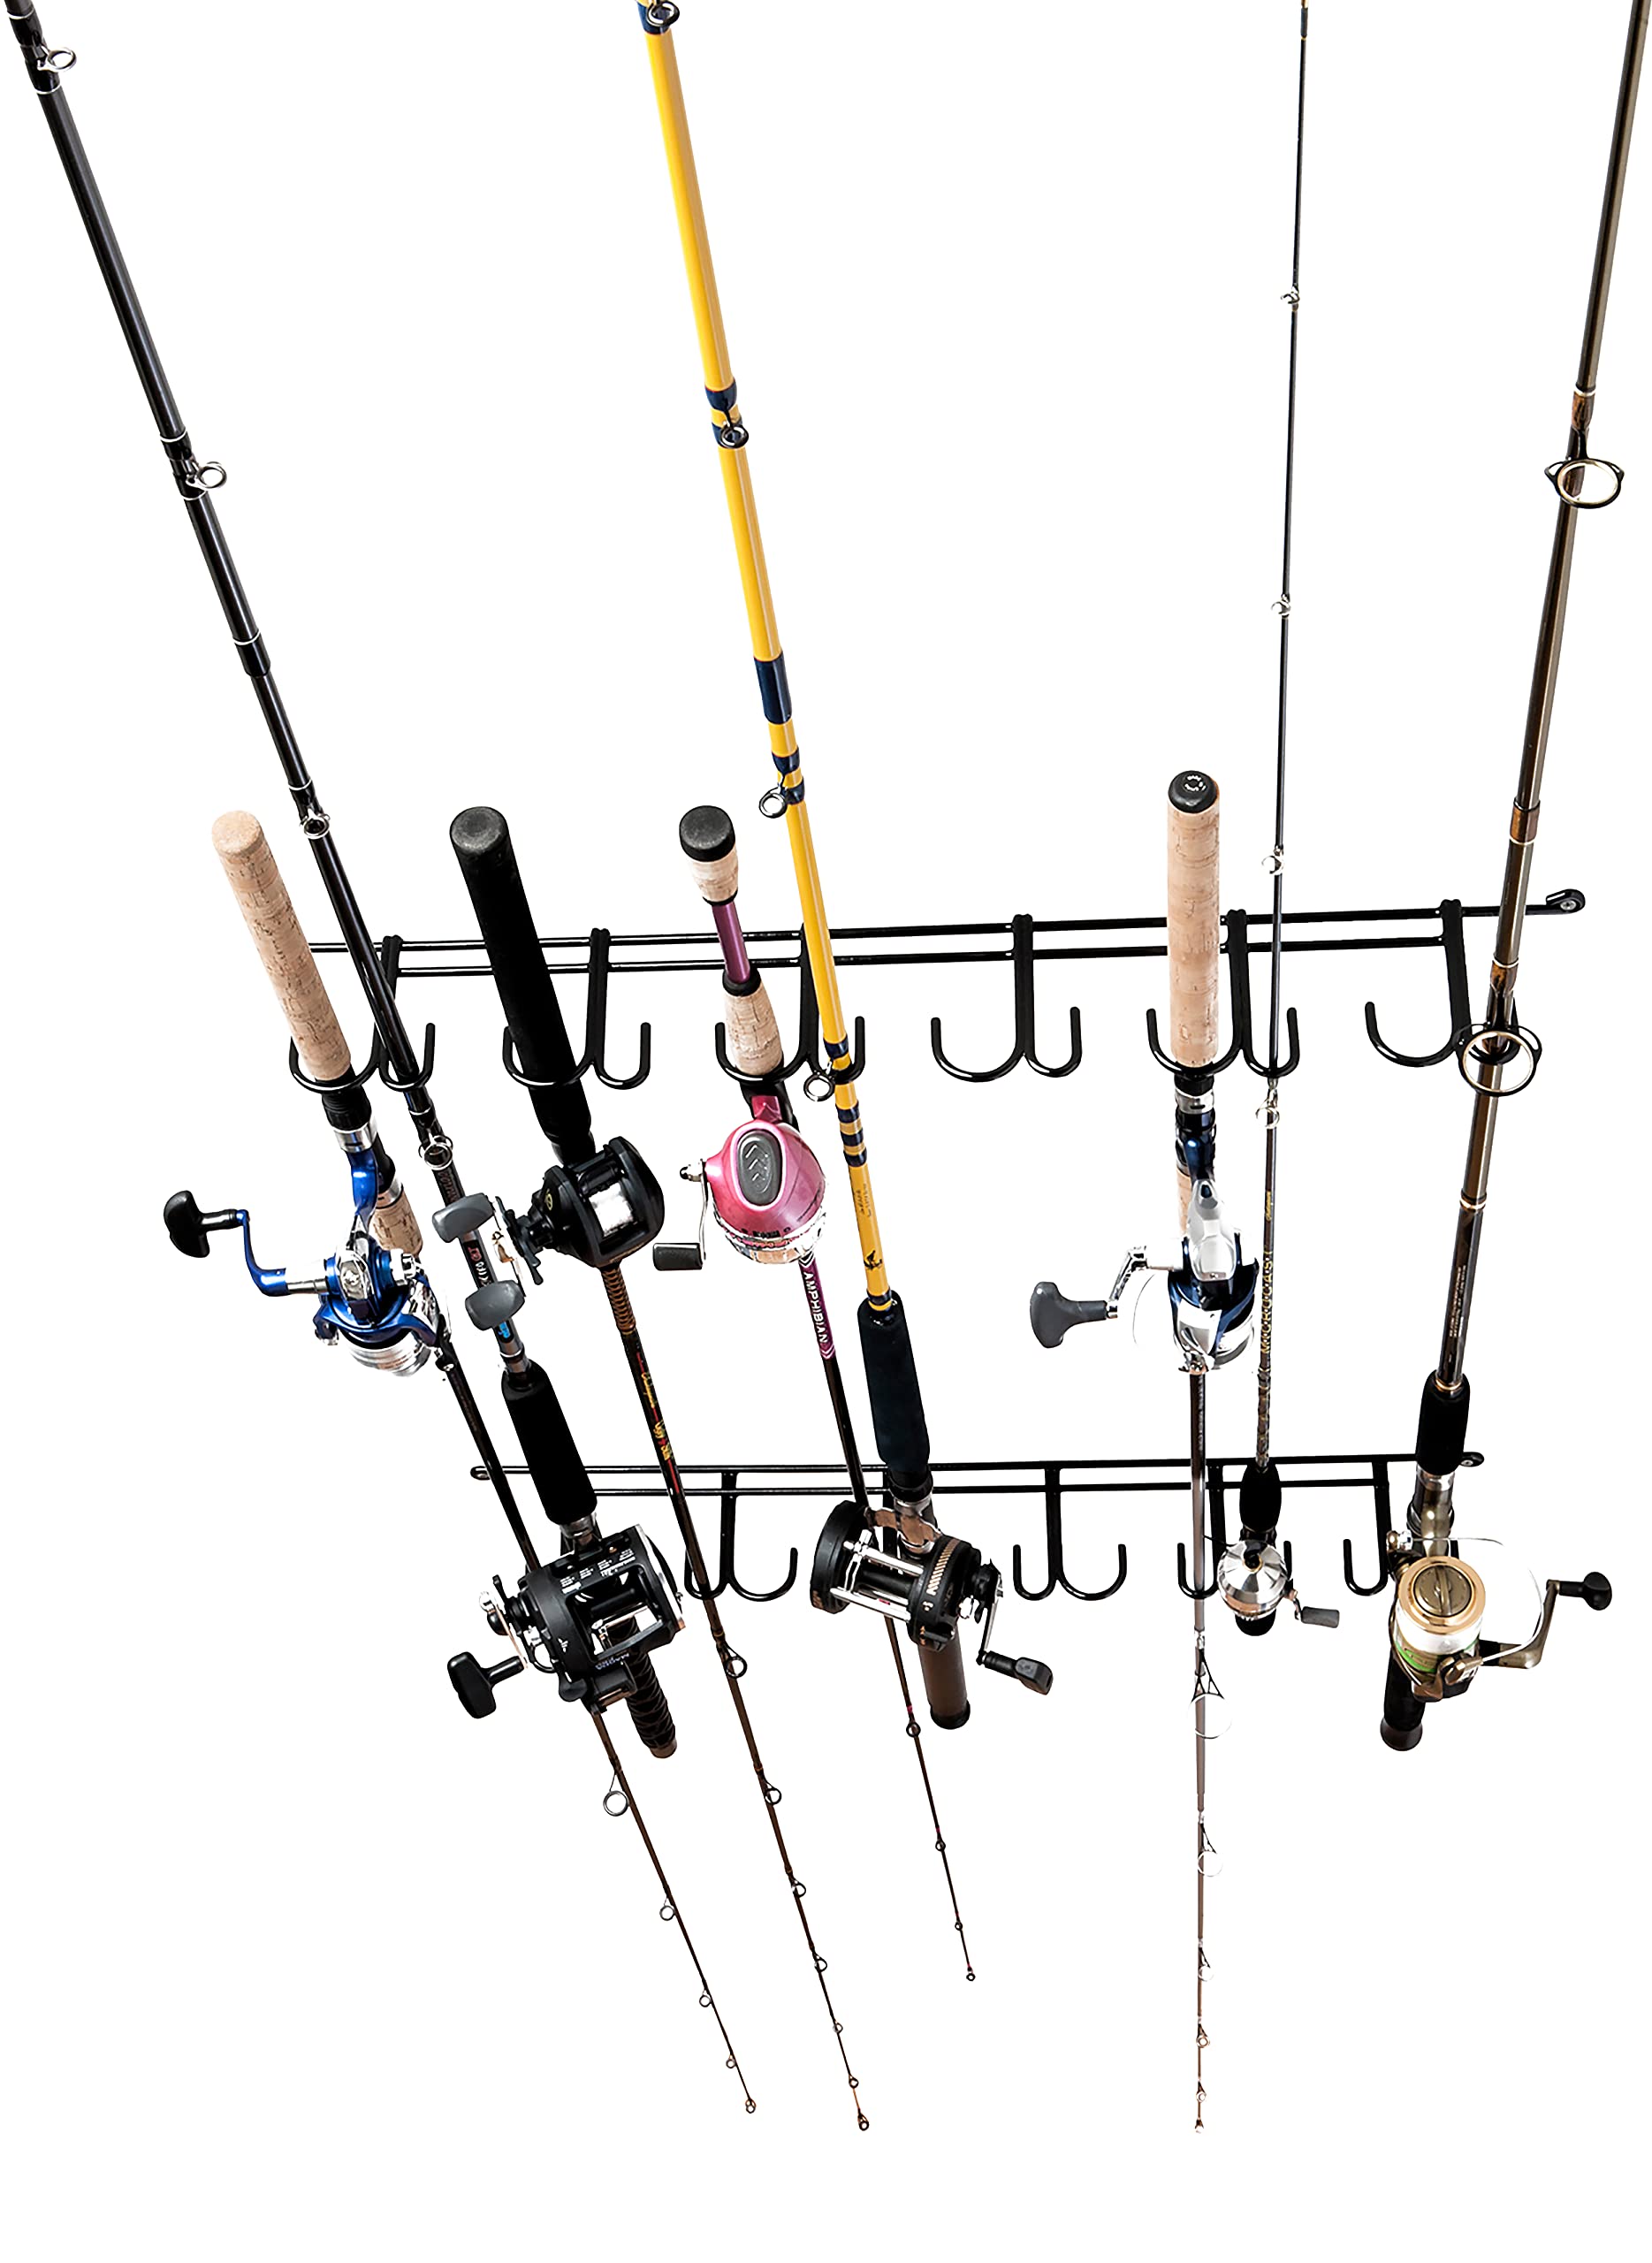 Rack'Em Fishing Rod Racks - Pole Holders - Mounted Storage Racks for Rods -  Ceiling or Wall Mount